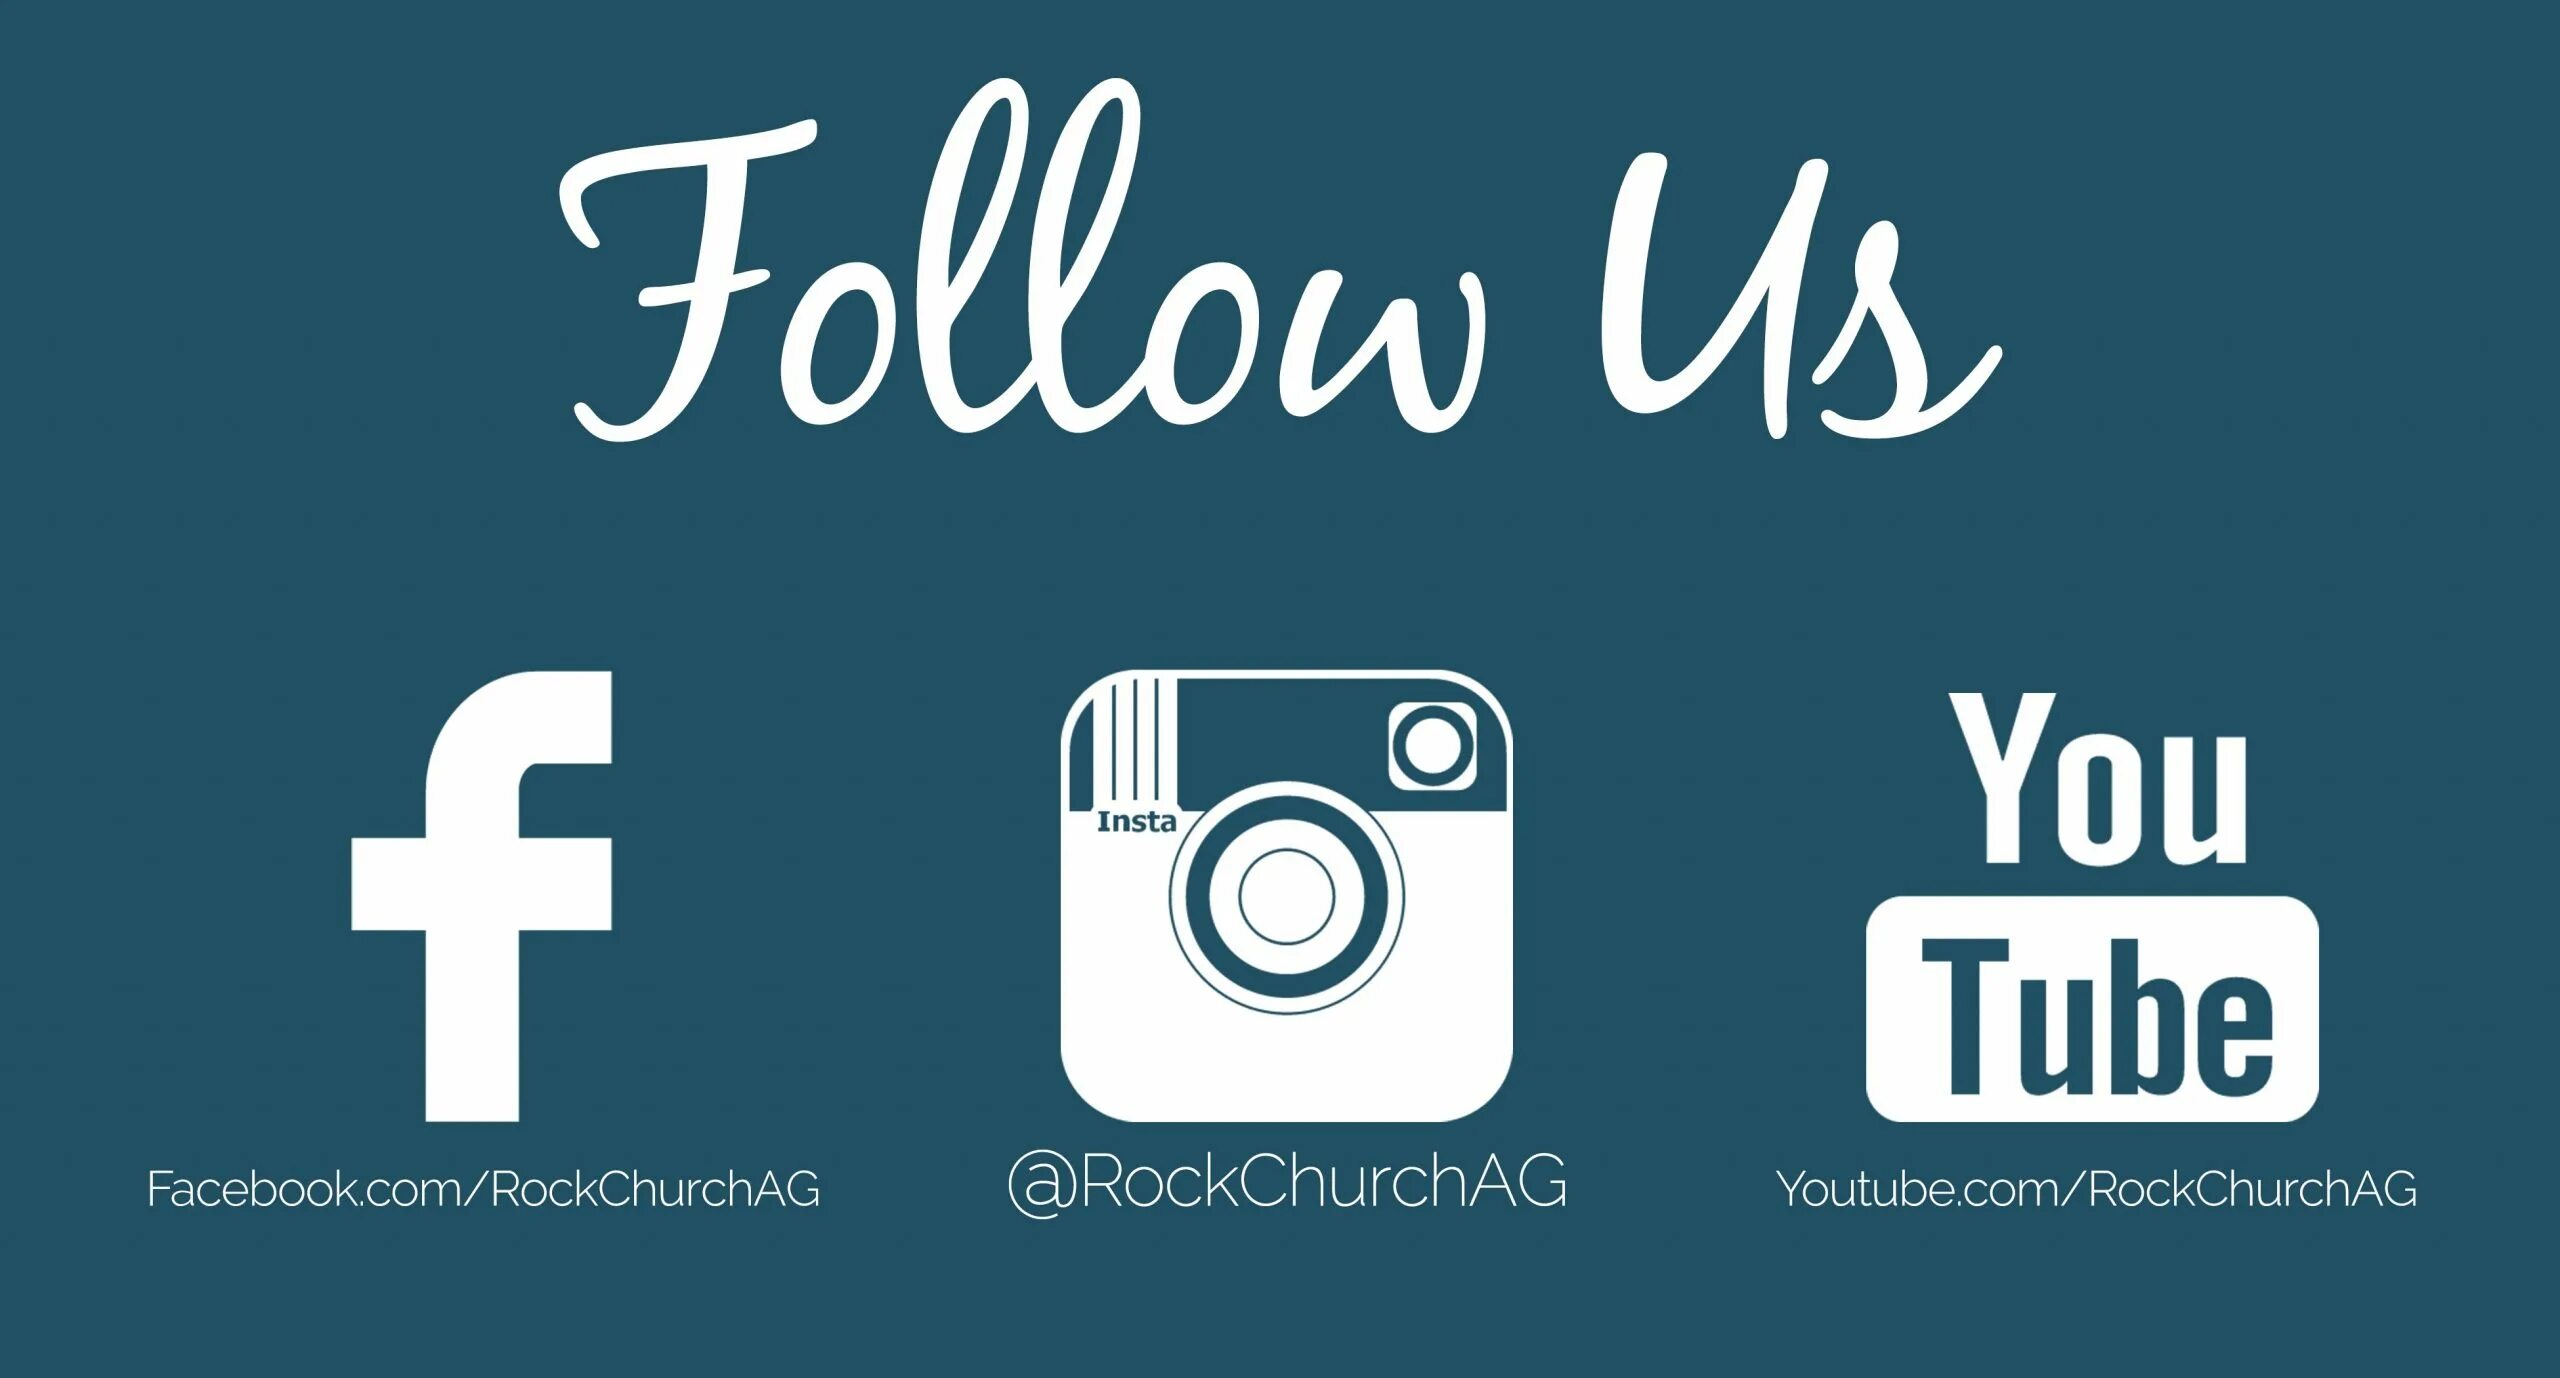 Better follow us now. Follow. Follow us. Facebook follow. Follow us on игра.